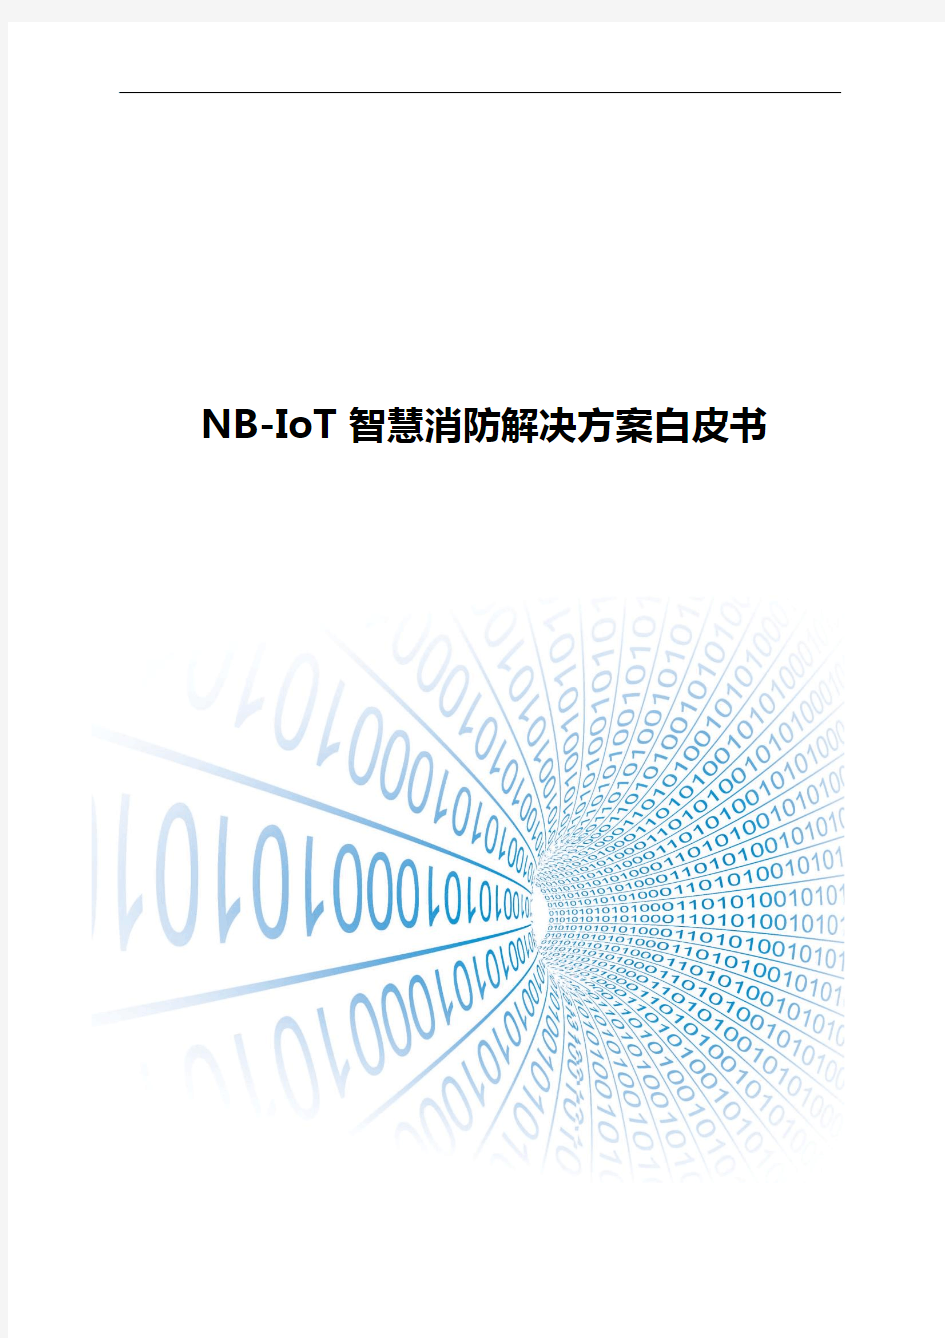 NB-IoT智慧消防解决方案白皮书